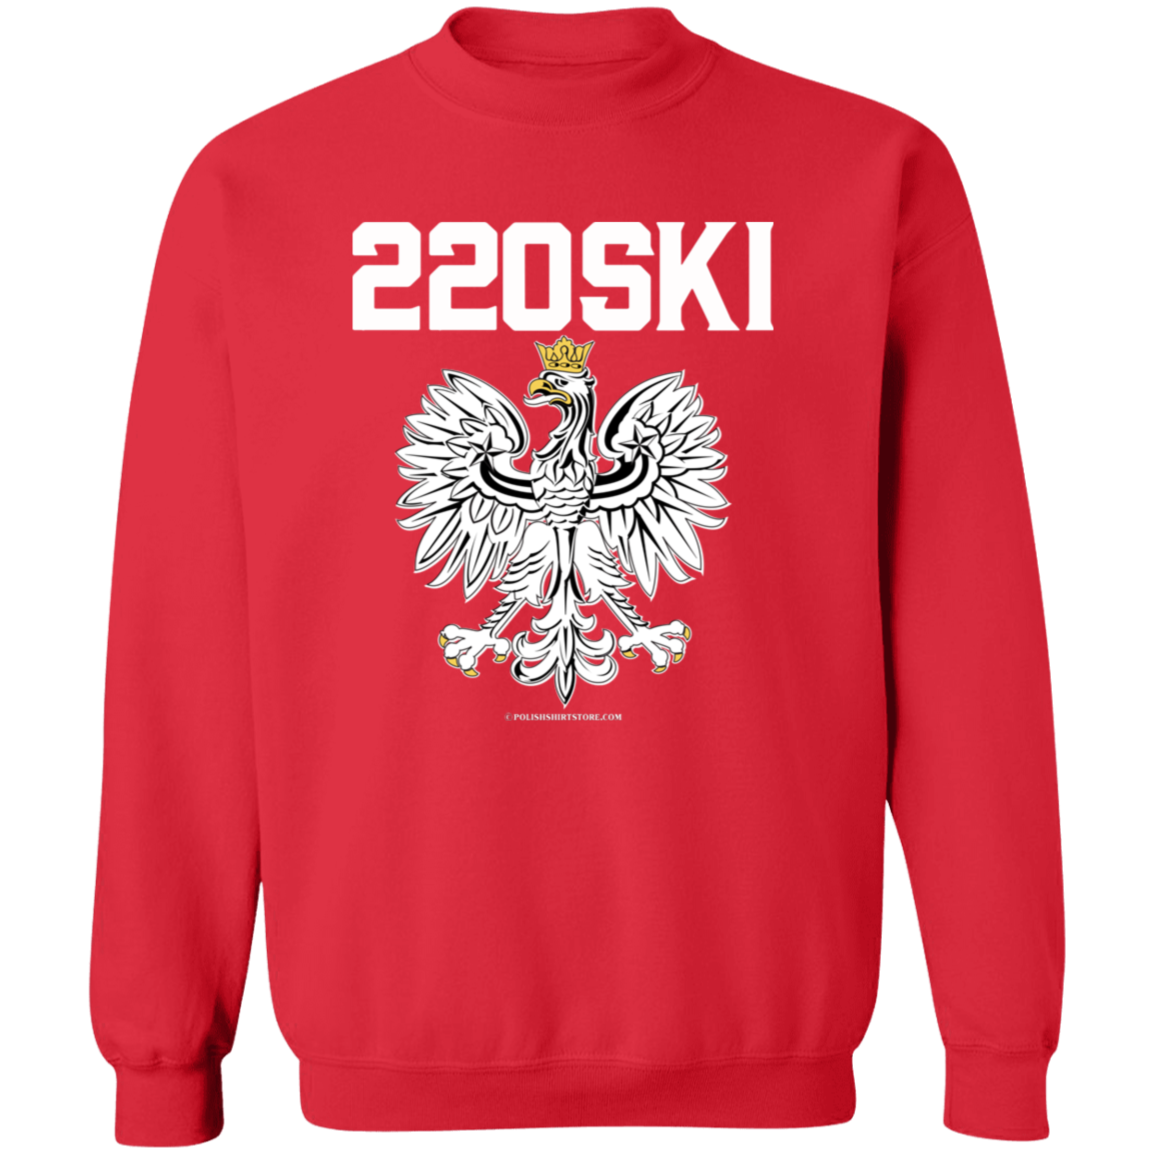 220SKI Apparel CustomCat G180 Crewneck Pullover Sweatshirt Red S